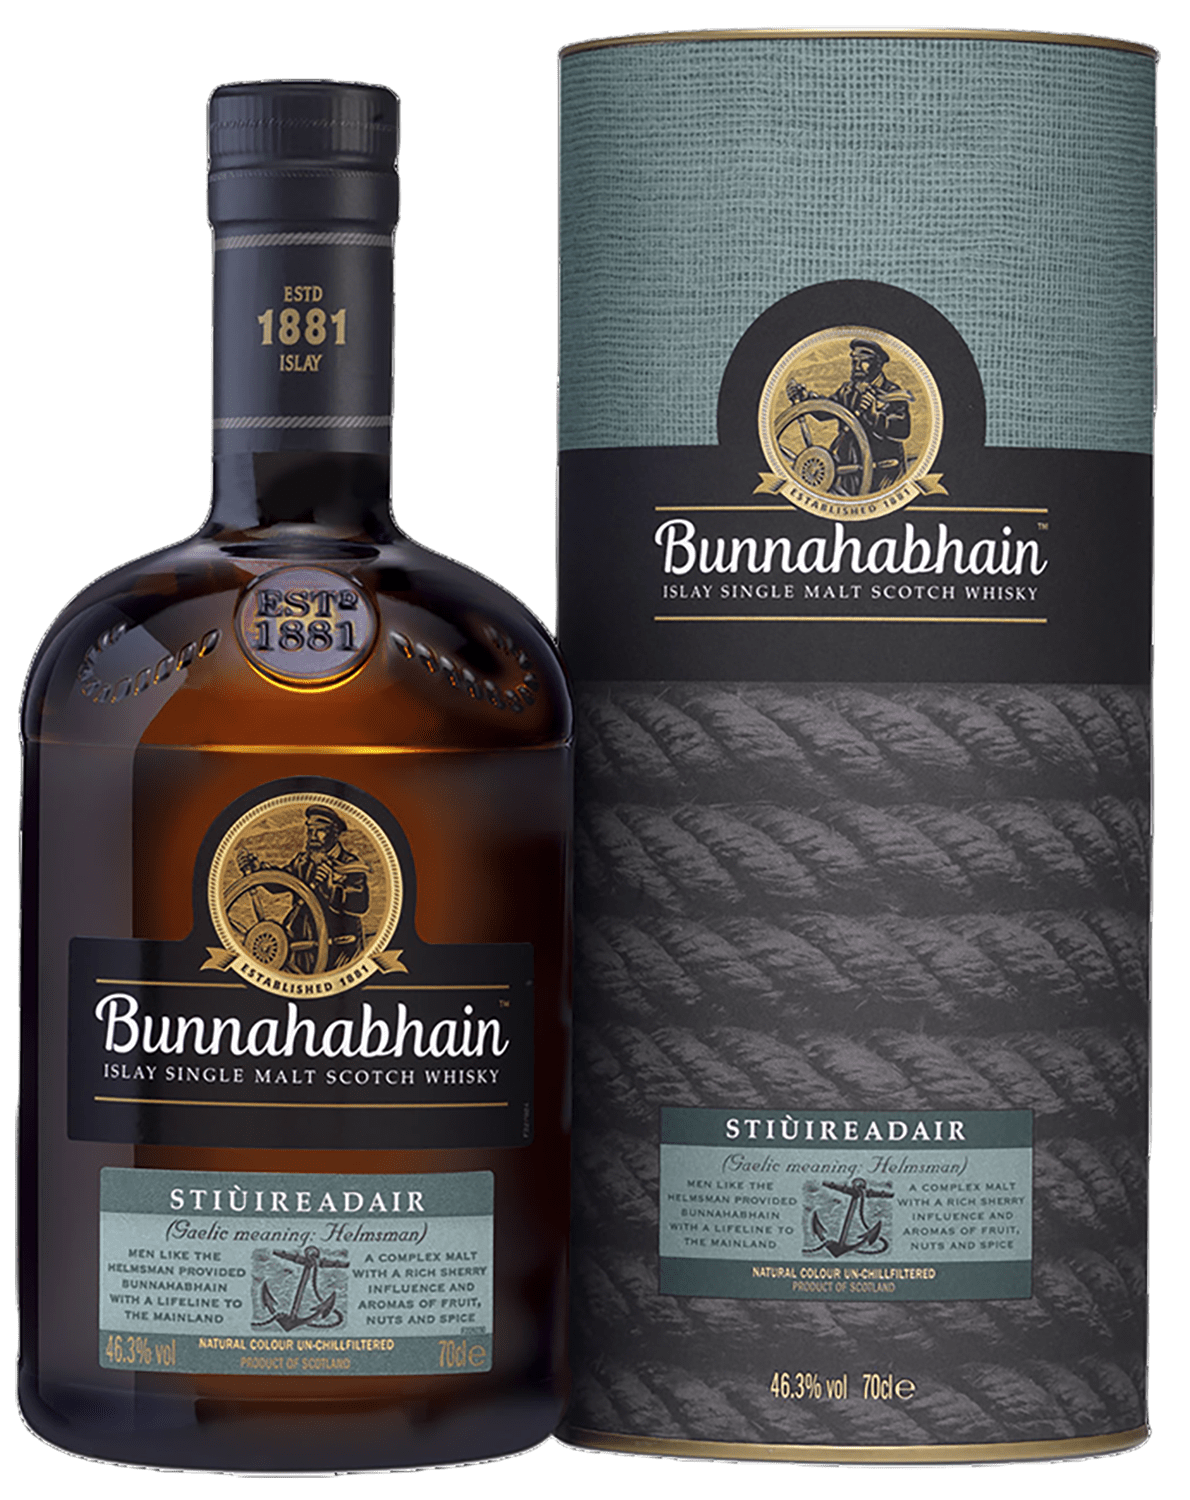 Bunnahabhain Stiuireadair Islay Single Malt Scotch Whisky (gift box) bowmore islay single malt scotch whisky 12 y o gift box